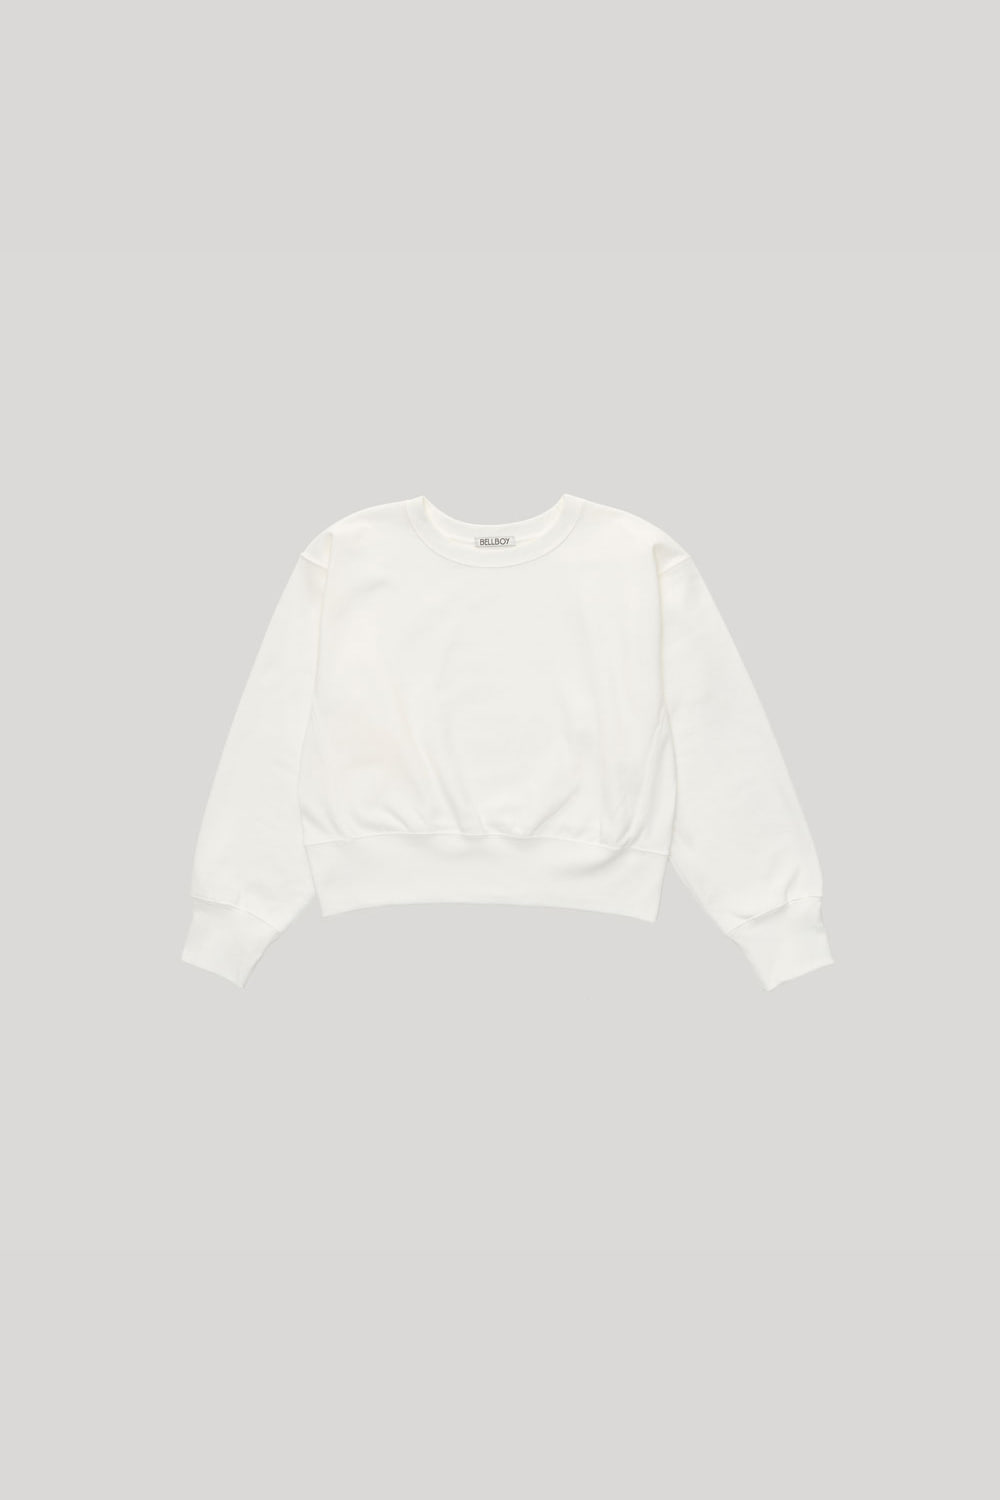 70&#039;s Sweatshirts - Painter (Cropped) 티셔츠, 워시드 헤비웨이트 티셔츠, 옥스포드셔츠, 버튼다운셔츠, 메신저백, 캔버스백